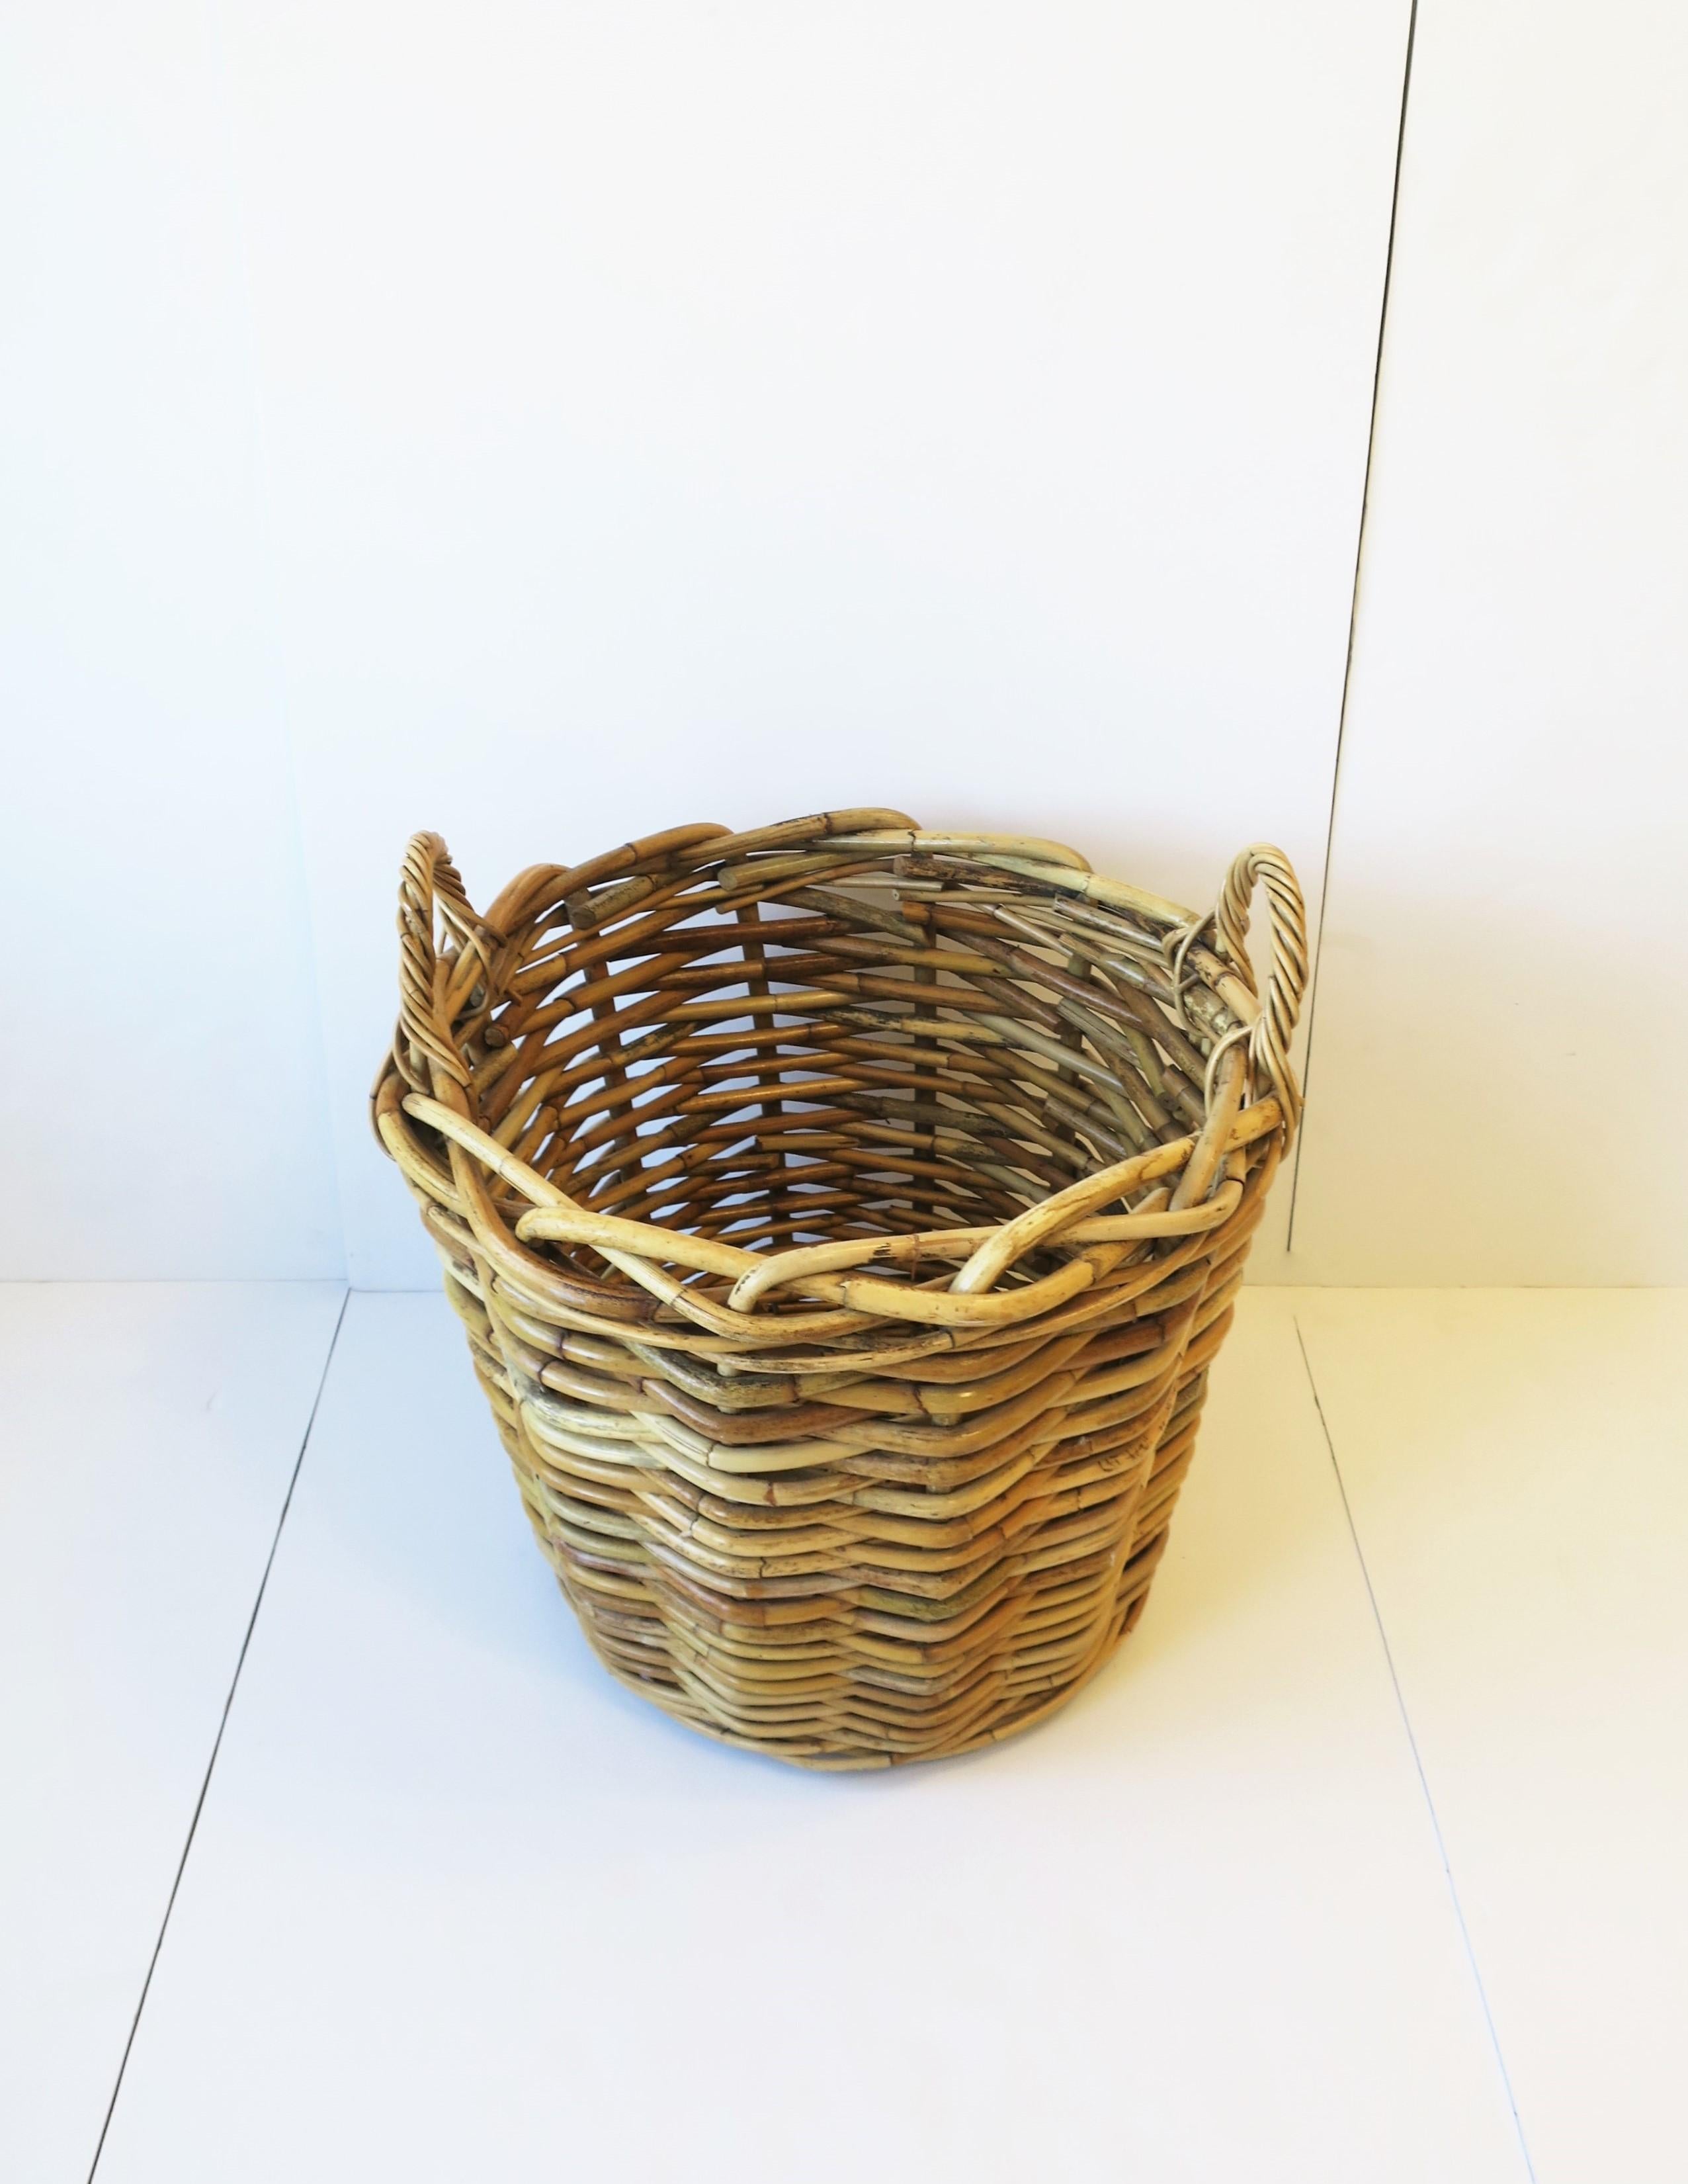 20th Century Wicker Rattan Basket with Handles